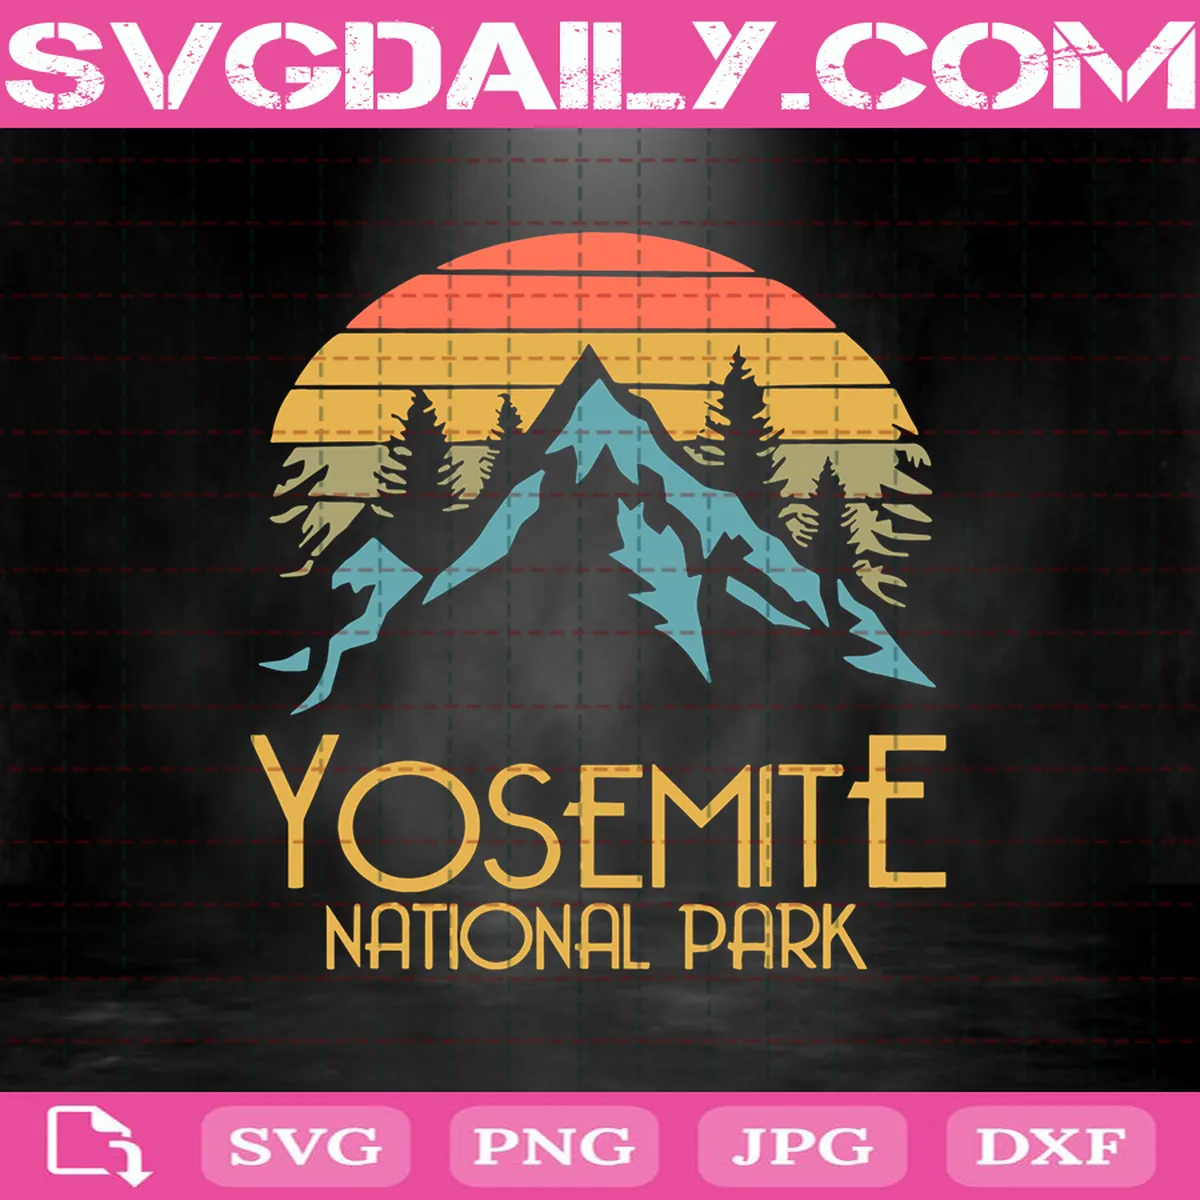 Yosemite National Park Svg, Yosemite Svg, Yosemite Park Svg, National Park Svg,Camping Svg, Hiking Svg, Moutains Svg, Yosemite Valley Svg